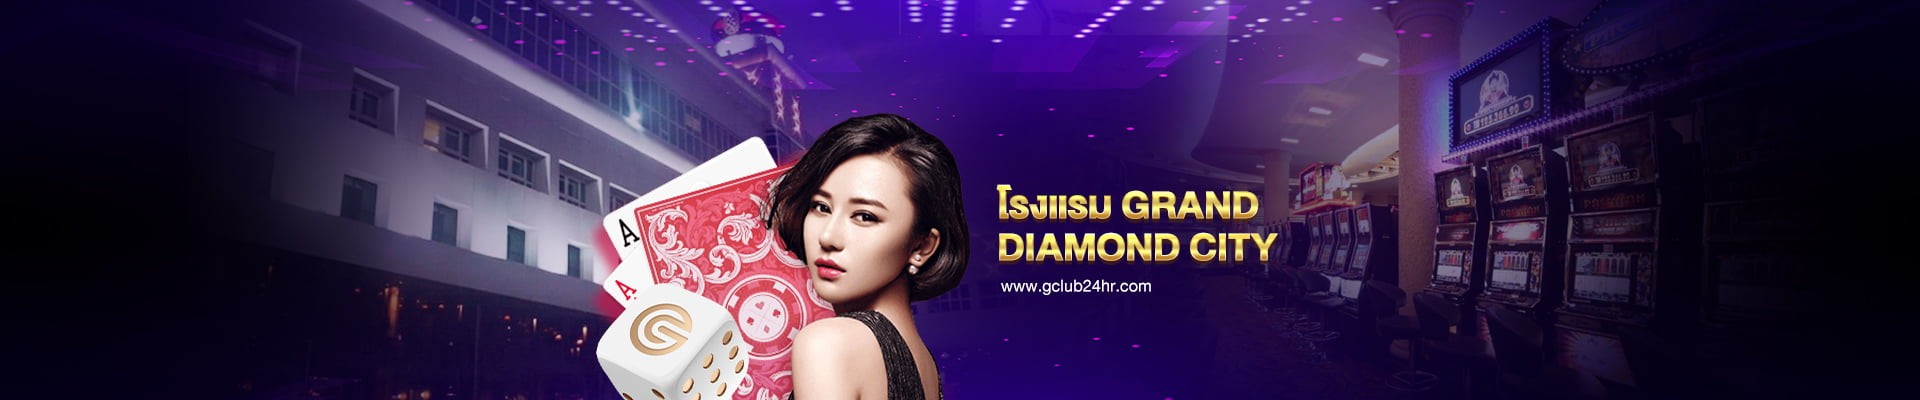 gclub24hr_casino_online_grand_diamond_city